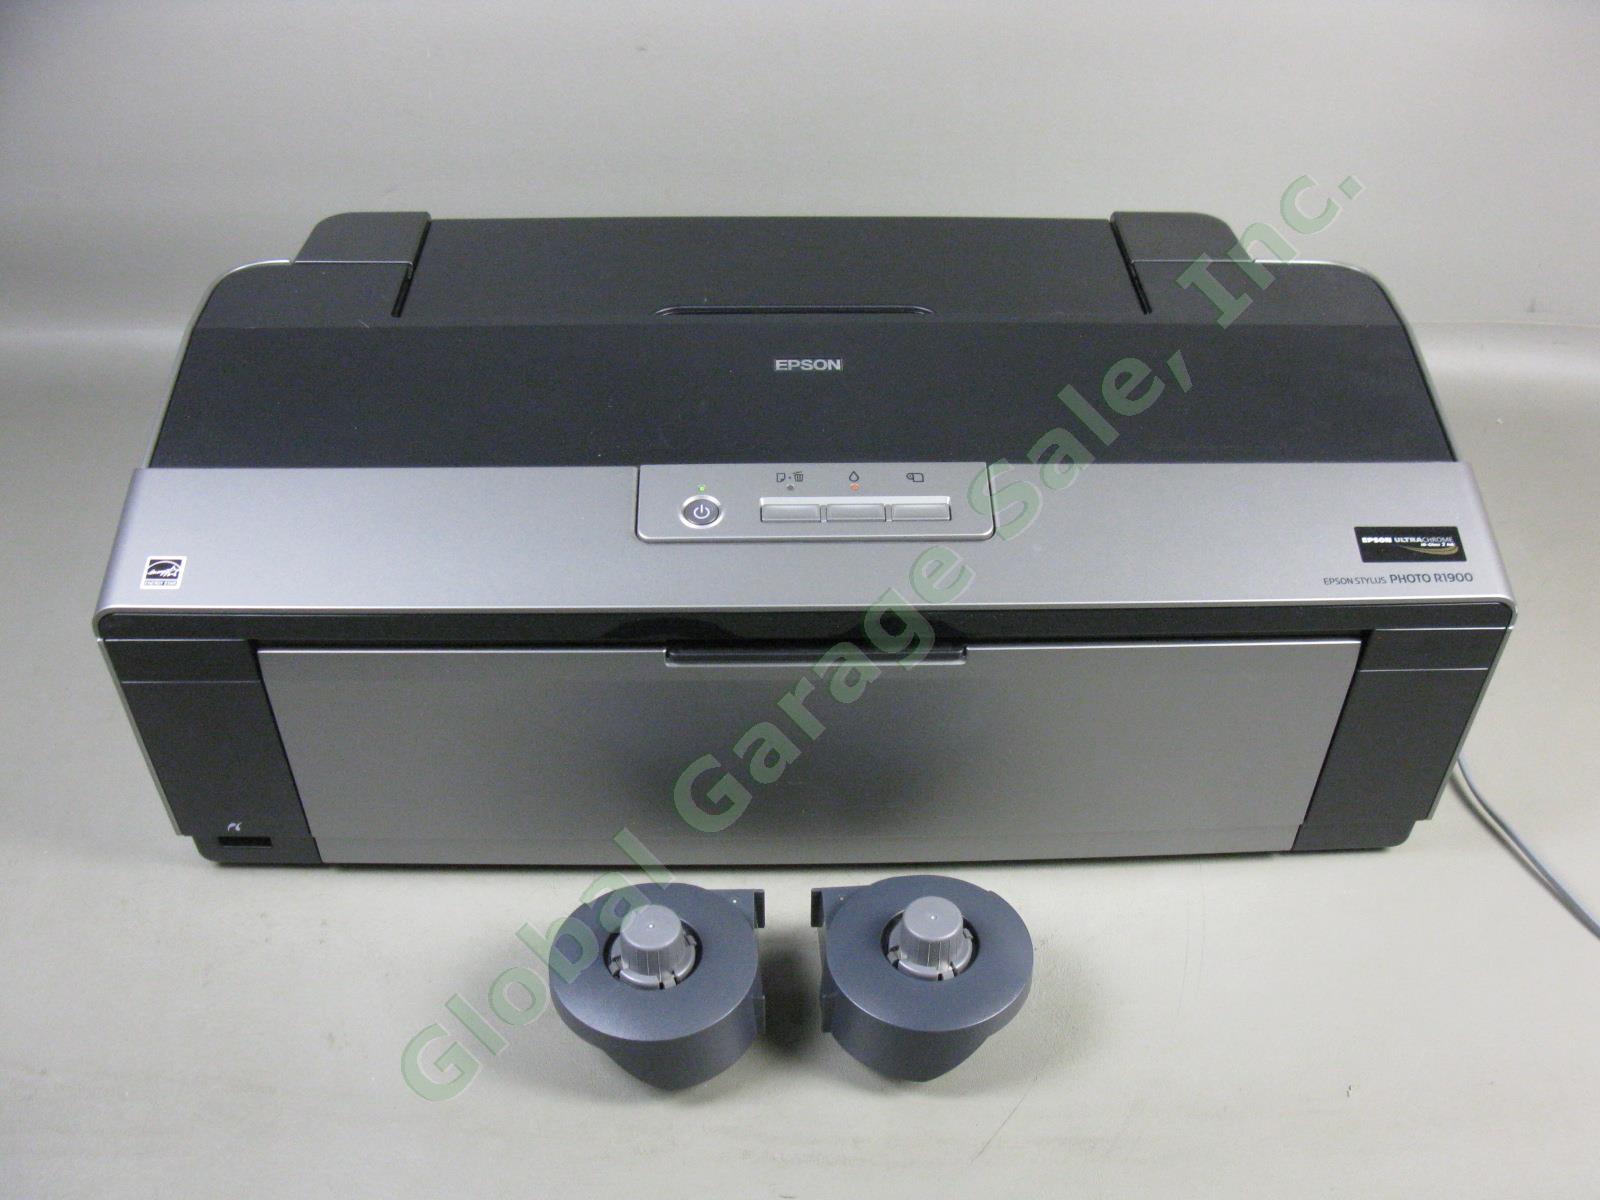 Epson Stylus Photo R1900 Digital Photo Inkjet Color Printer Ultrachrome B431a 8287